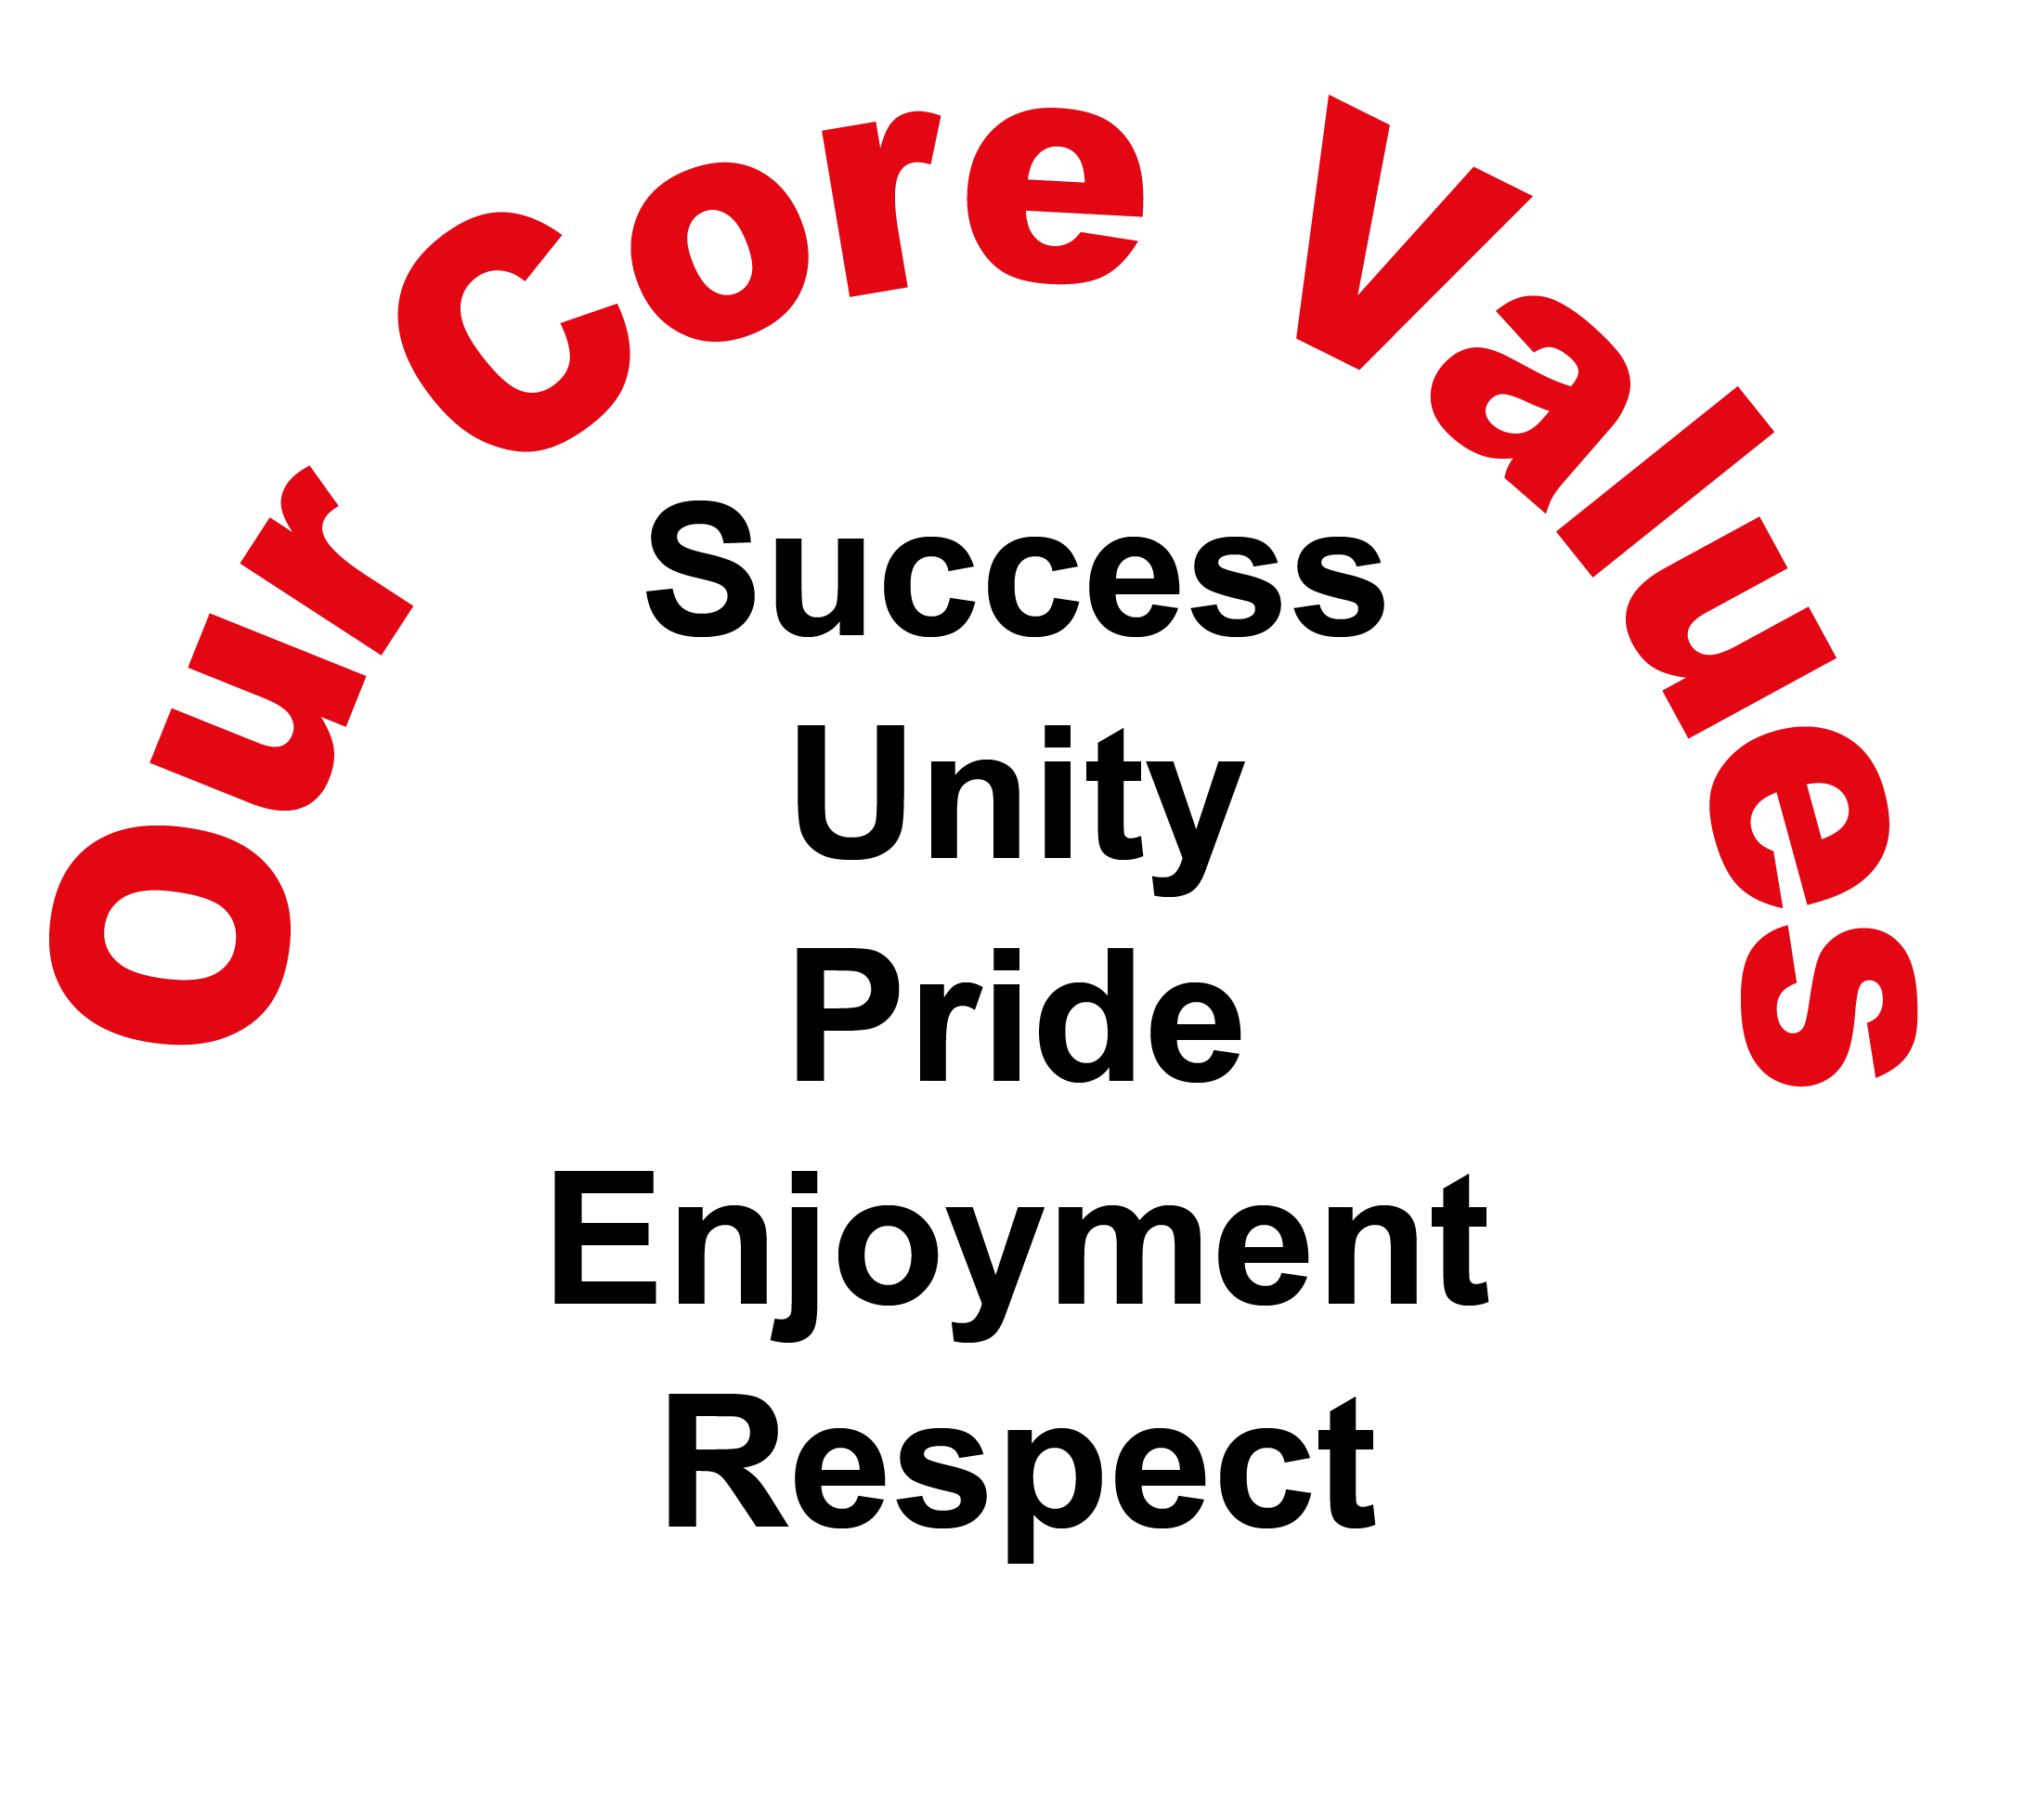 Our-Core-Values